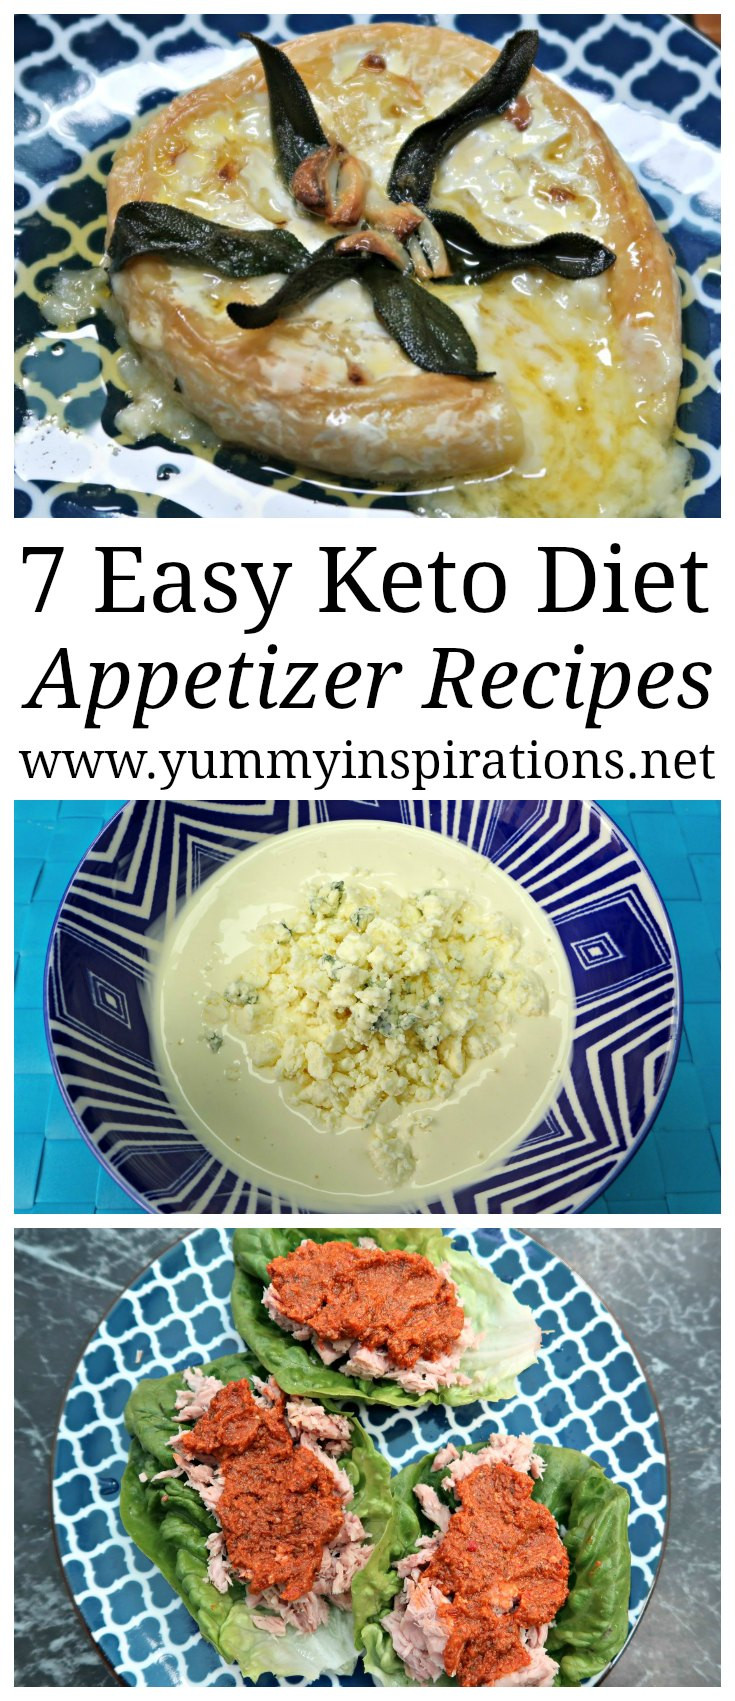 Easy Keto Appetizers
 7 Easy Keto Appetizers Recipes Simple Low Carb Appetizer